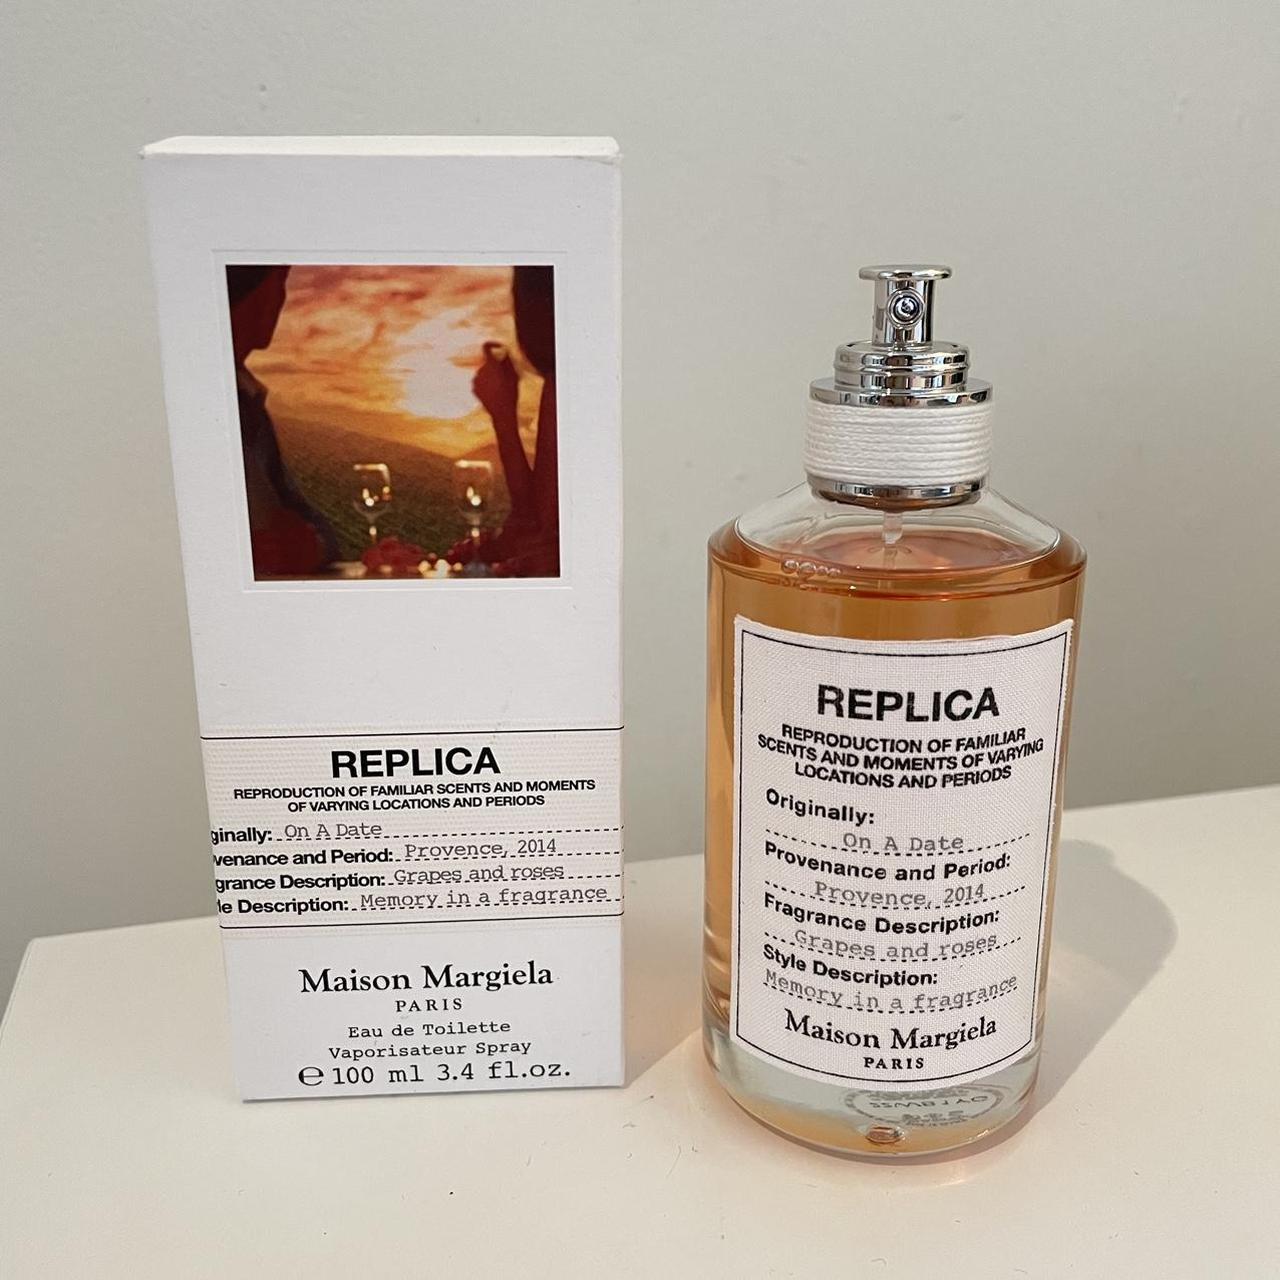 Maison Margiela Fragrance | Depop